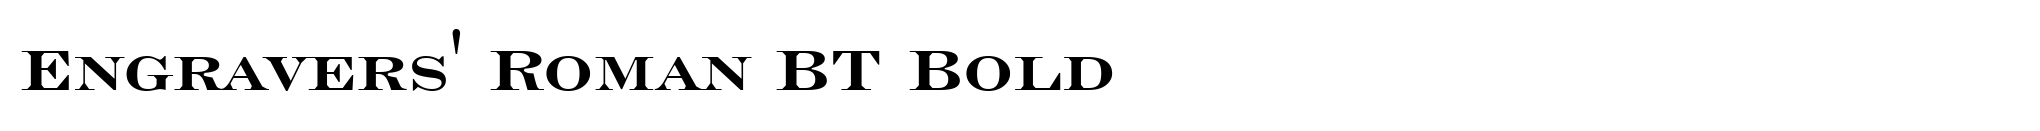 Engravers' Roman BT Bold image